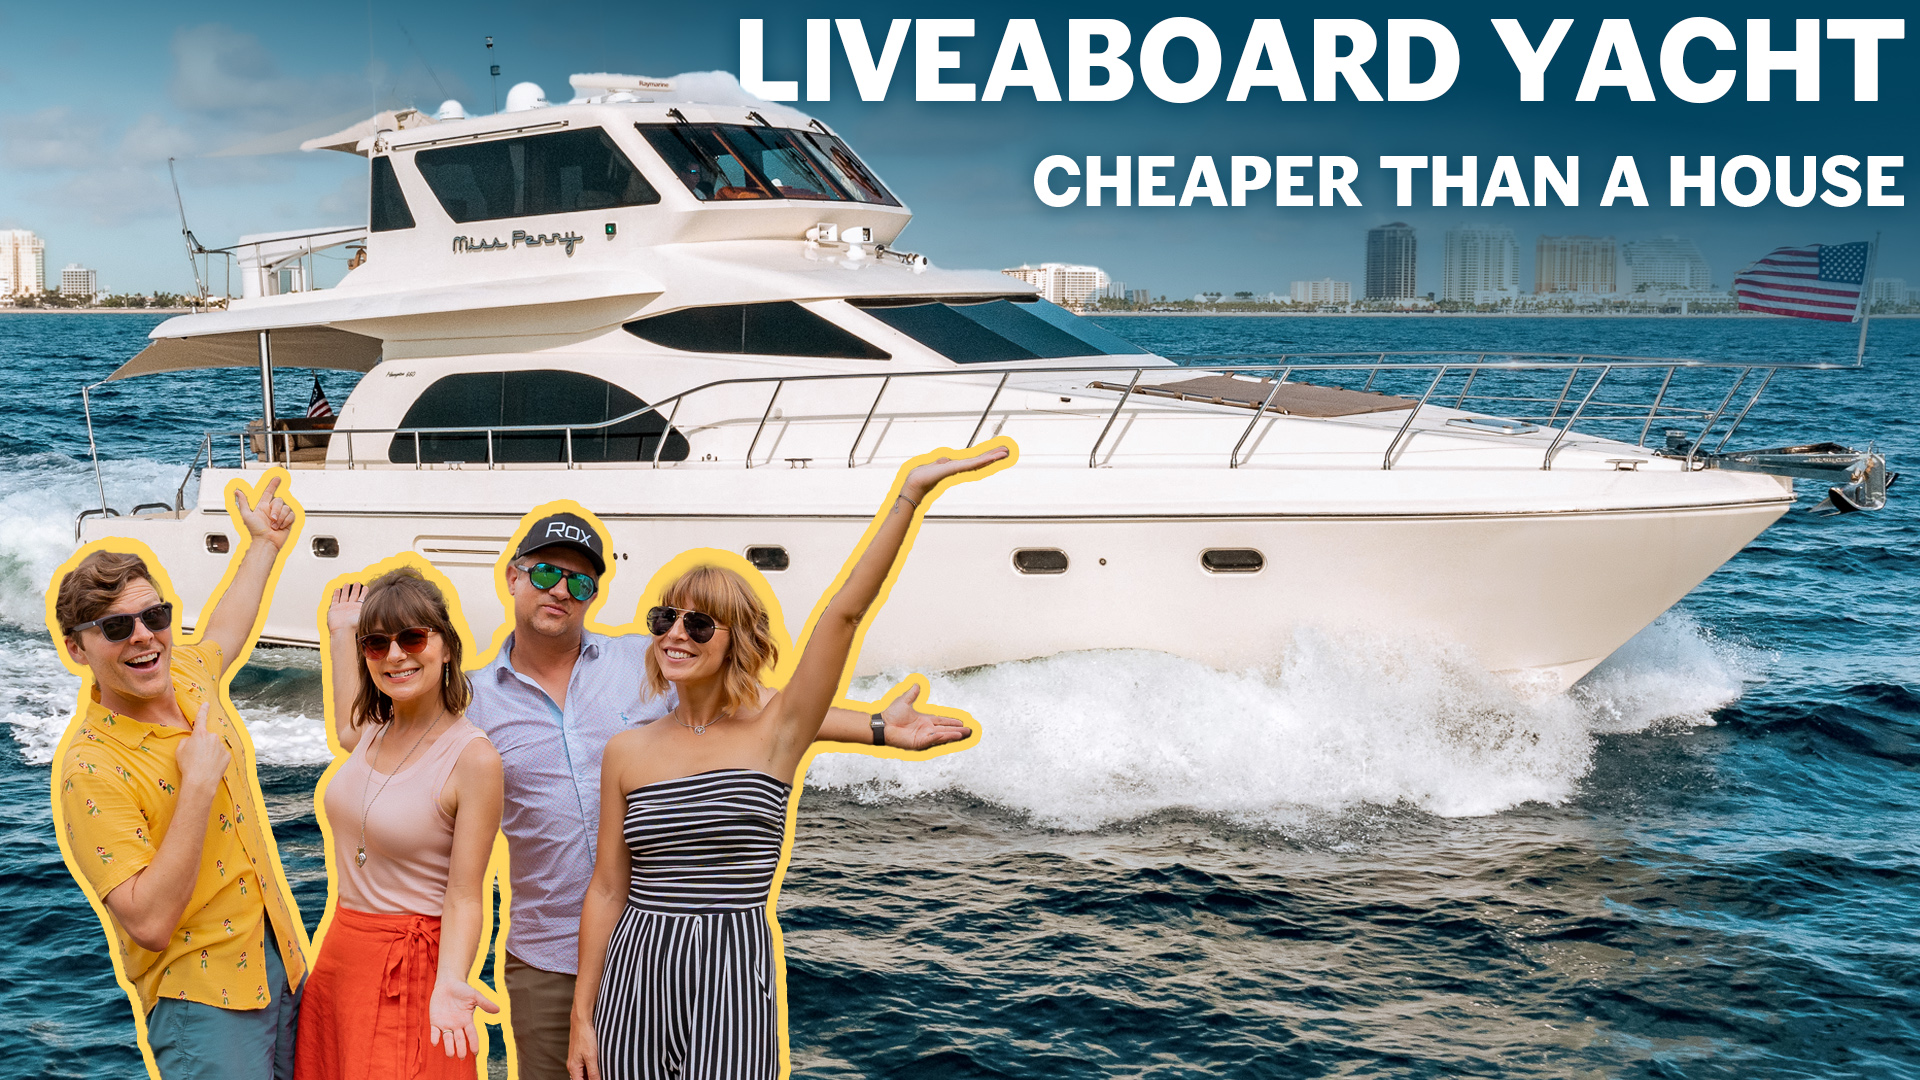 Jason and Nikki Wynn, luxury yacht living cheaper than a house